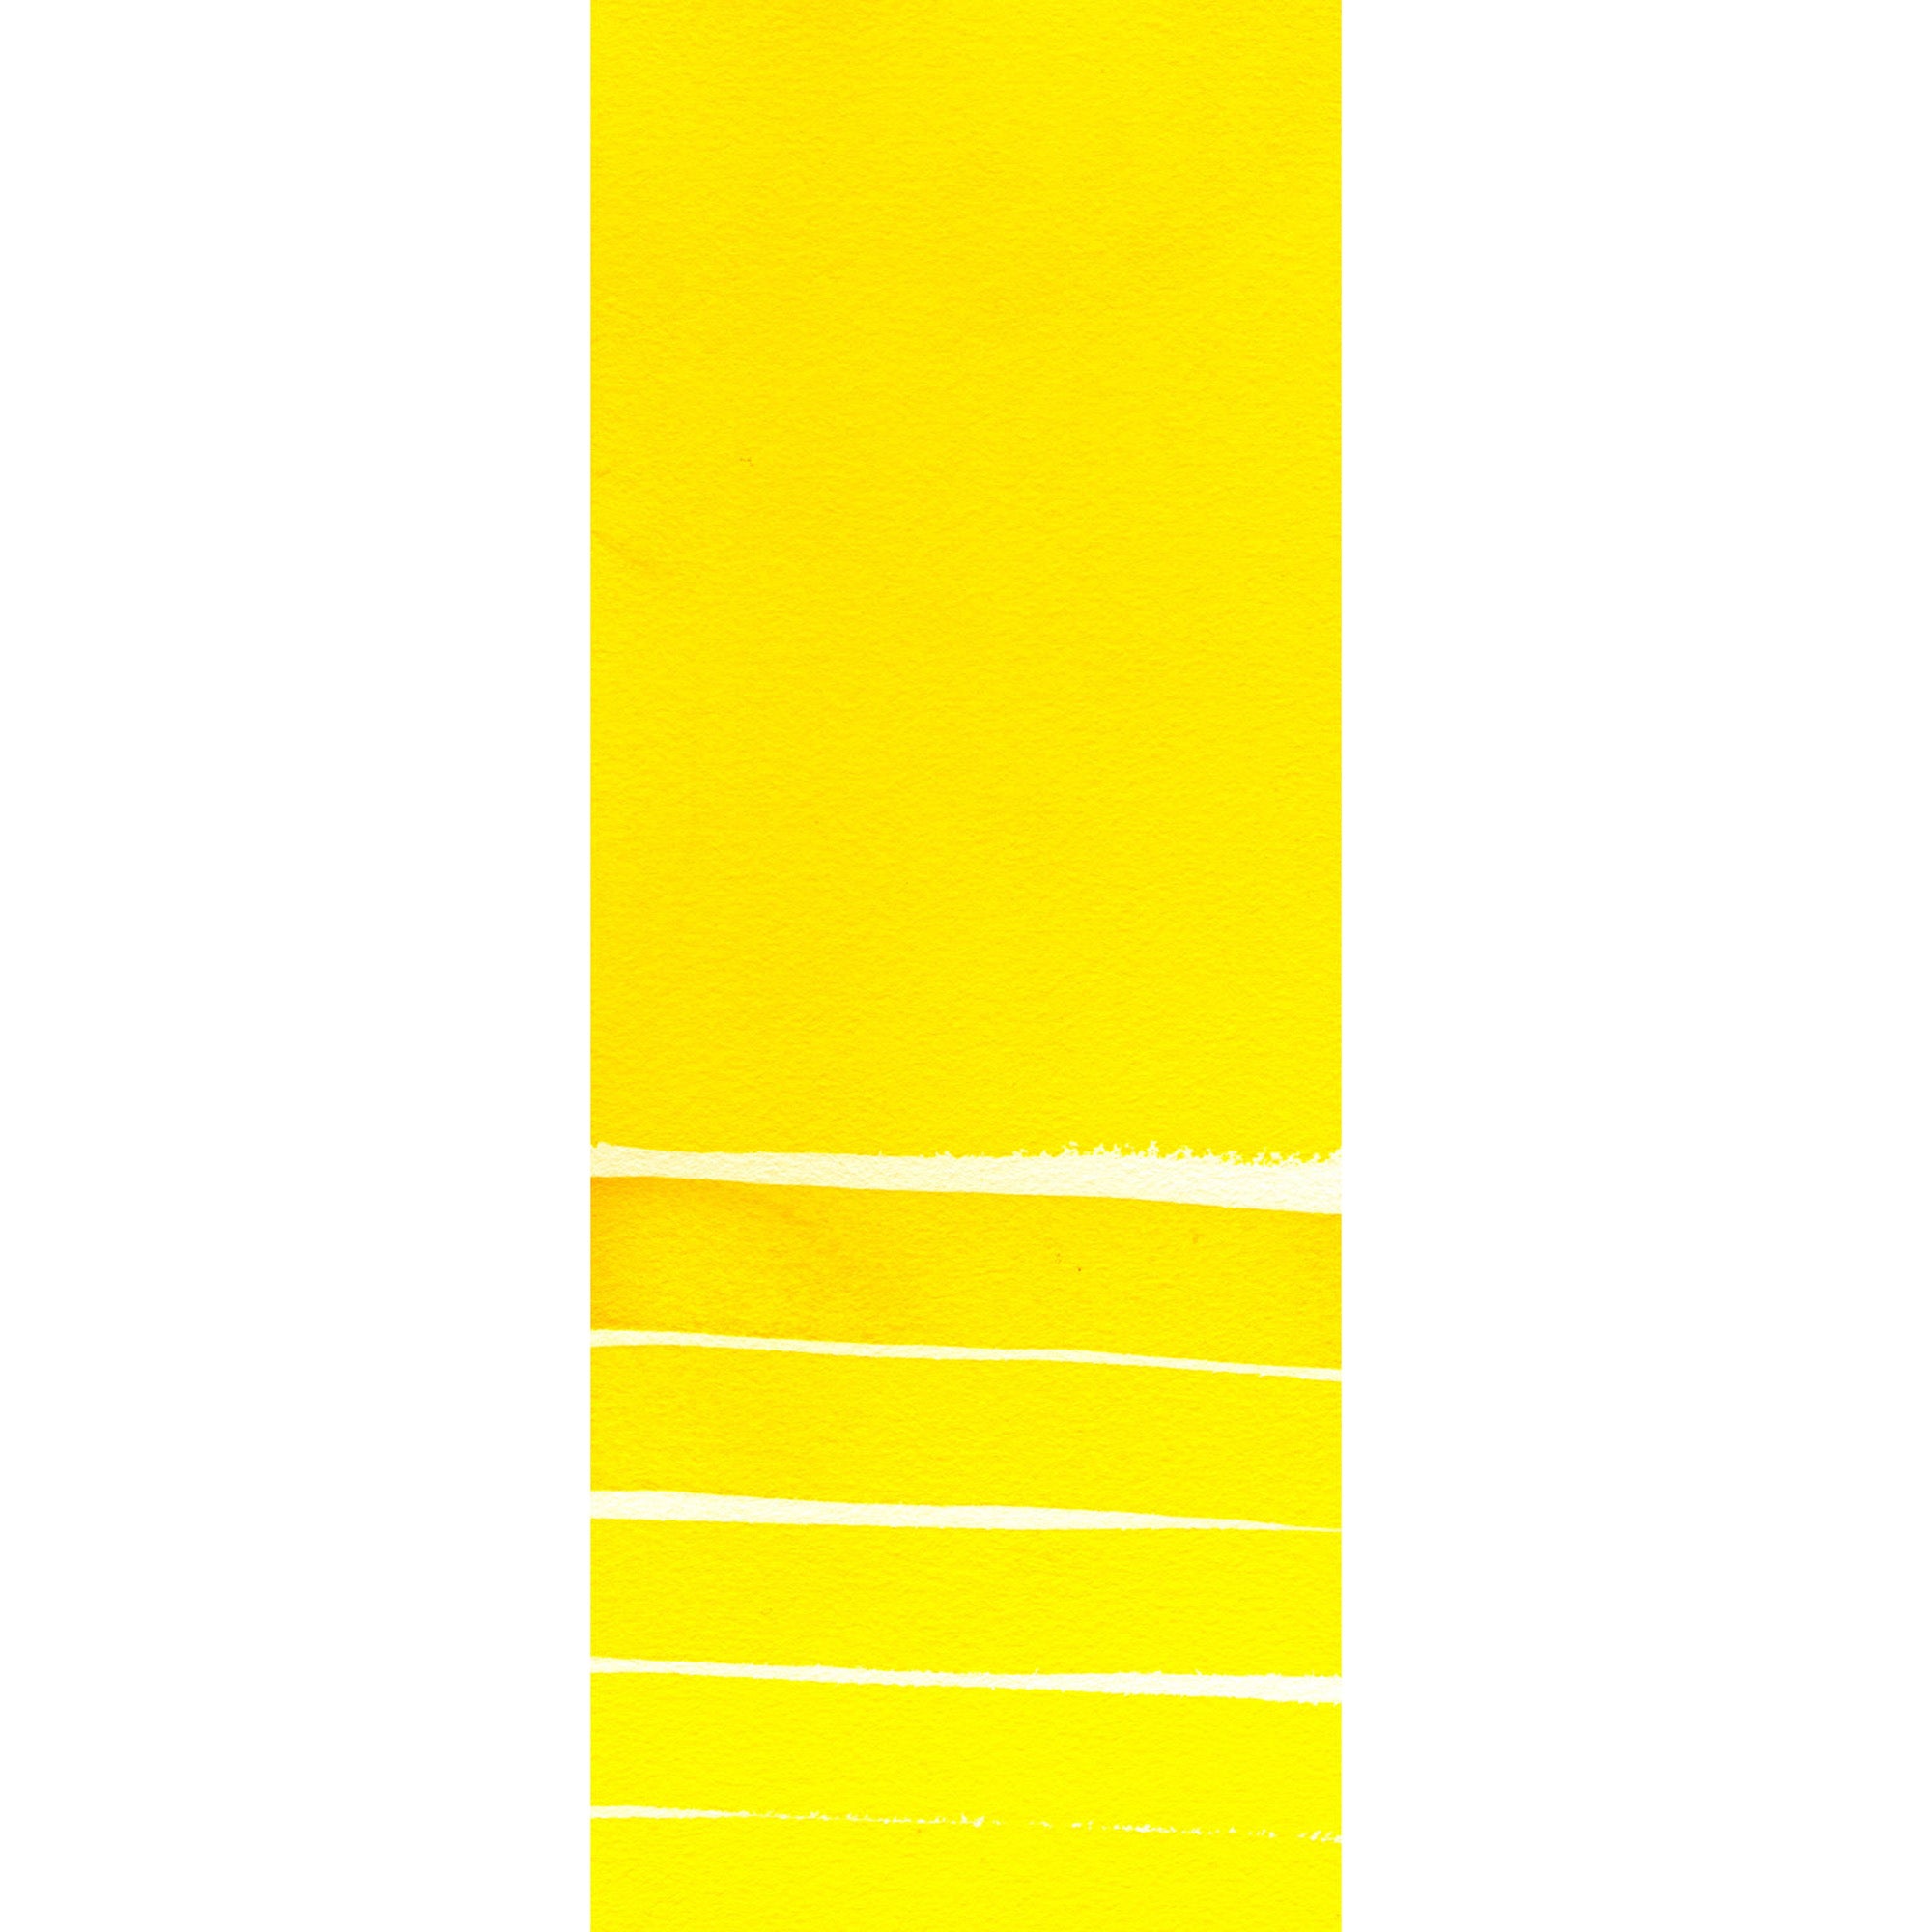 Daniel Smith : Watercolor - Cadmium Yellow Medium Hue